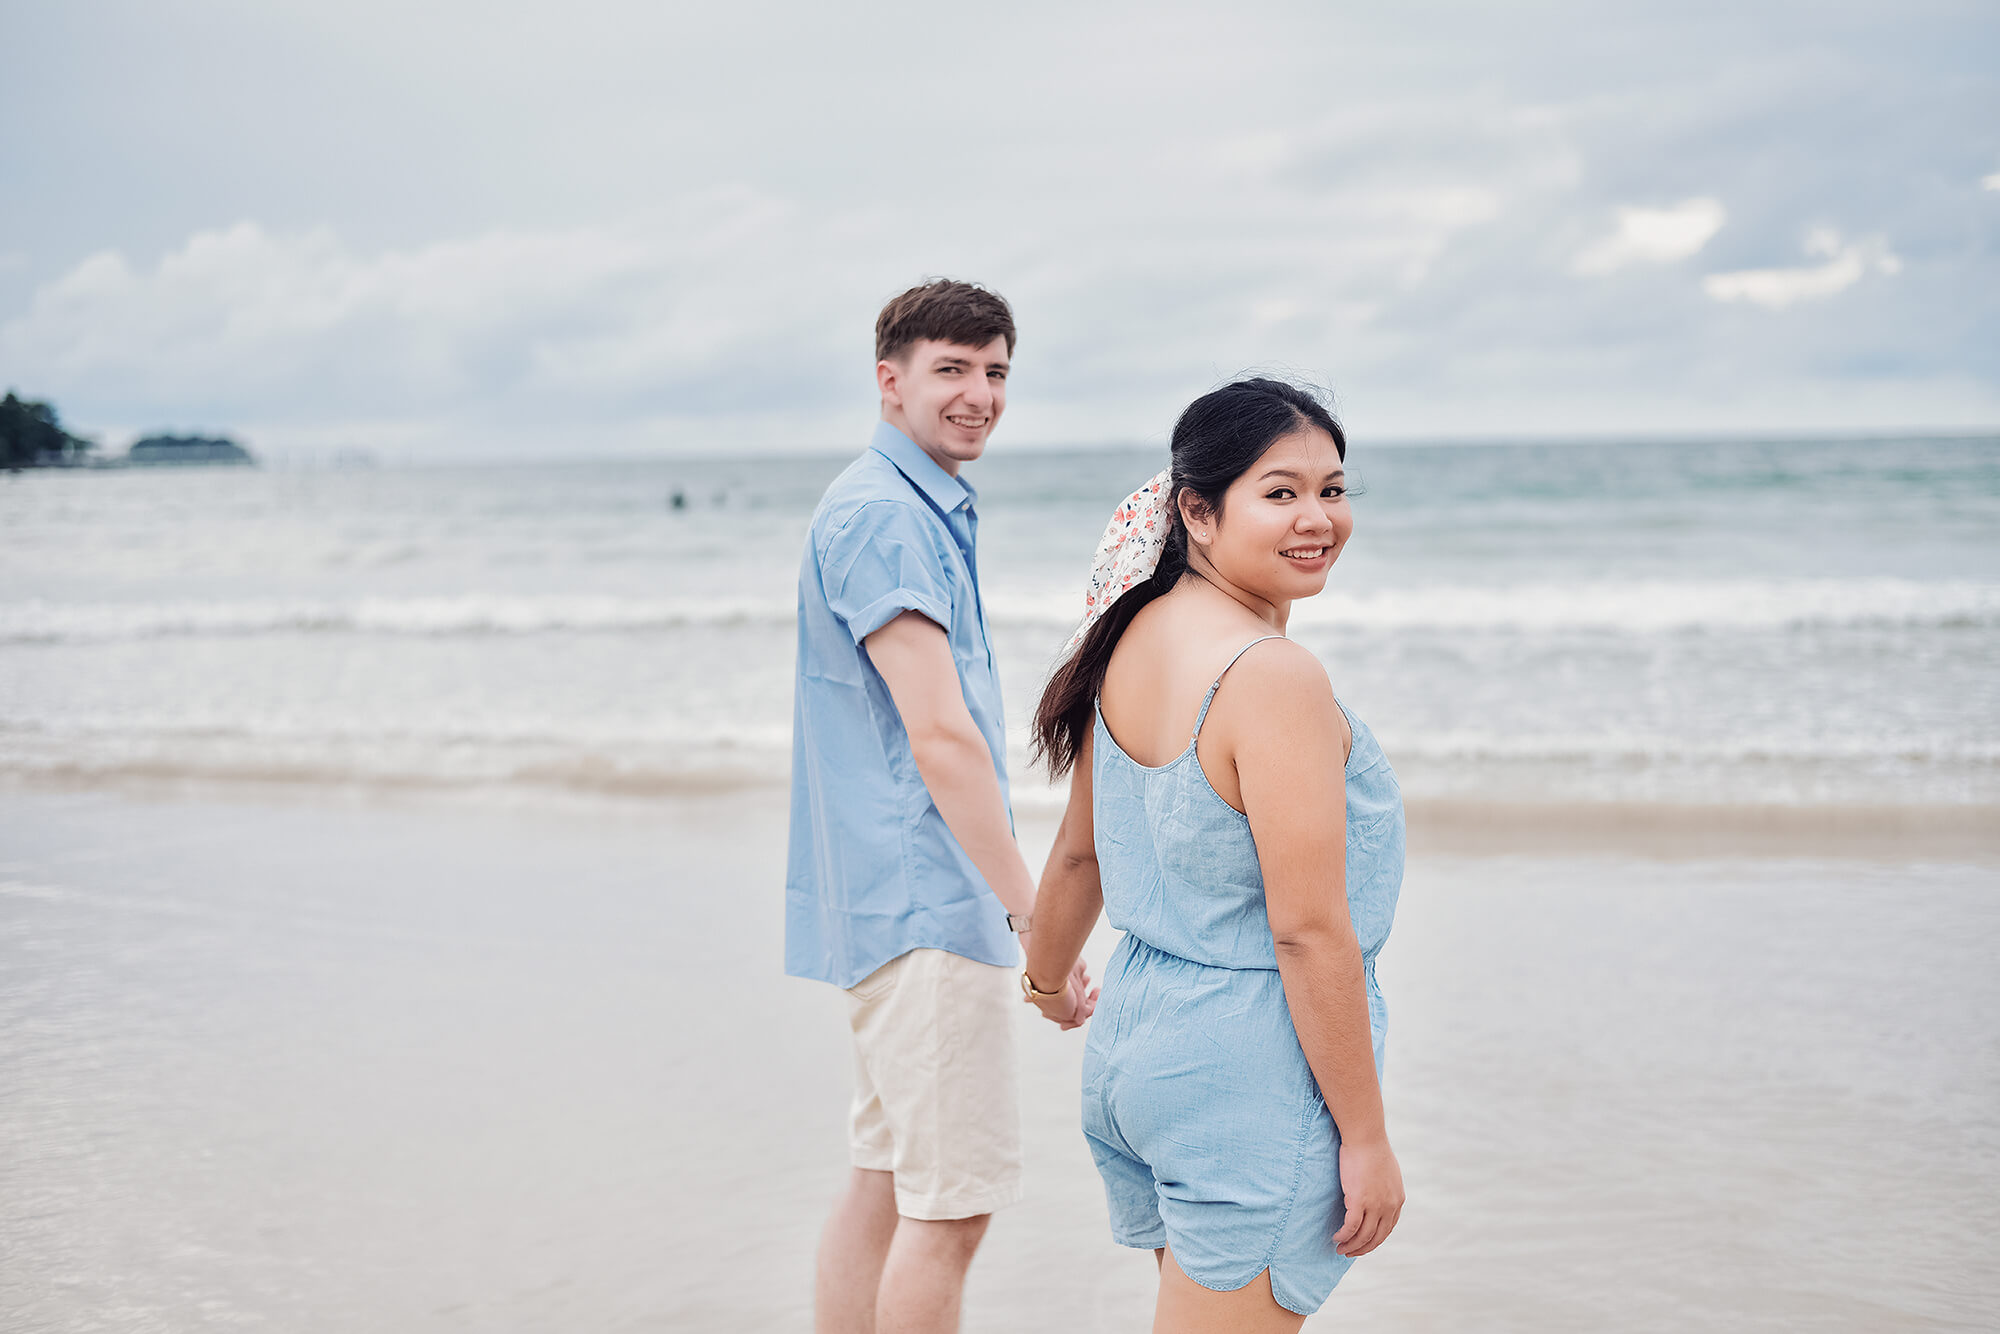 Patong Beach holiday couple photoshoot